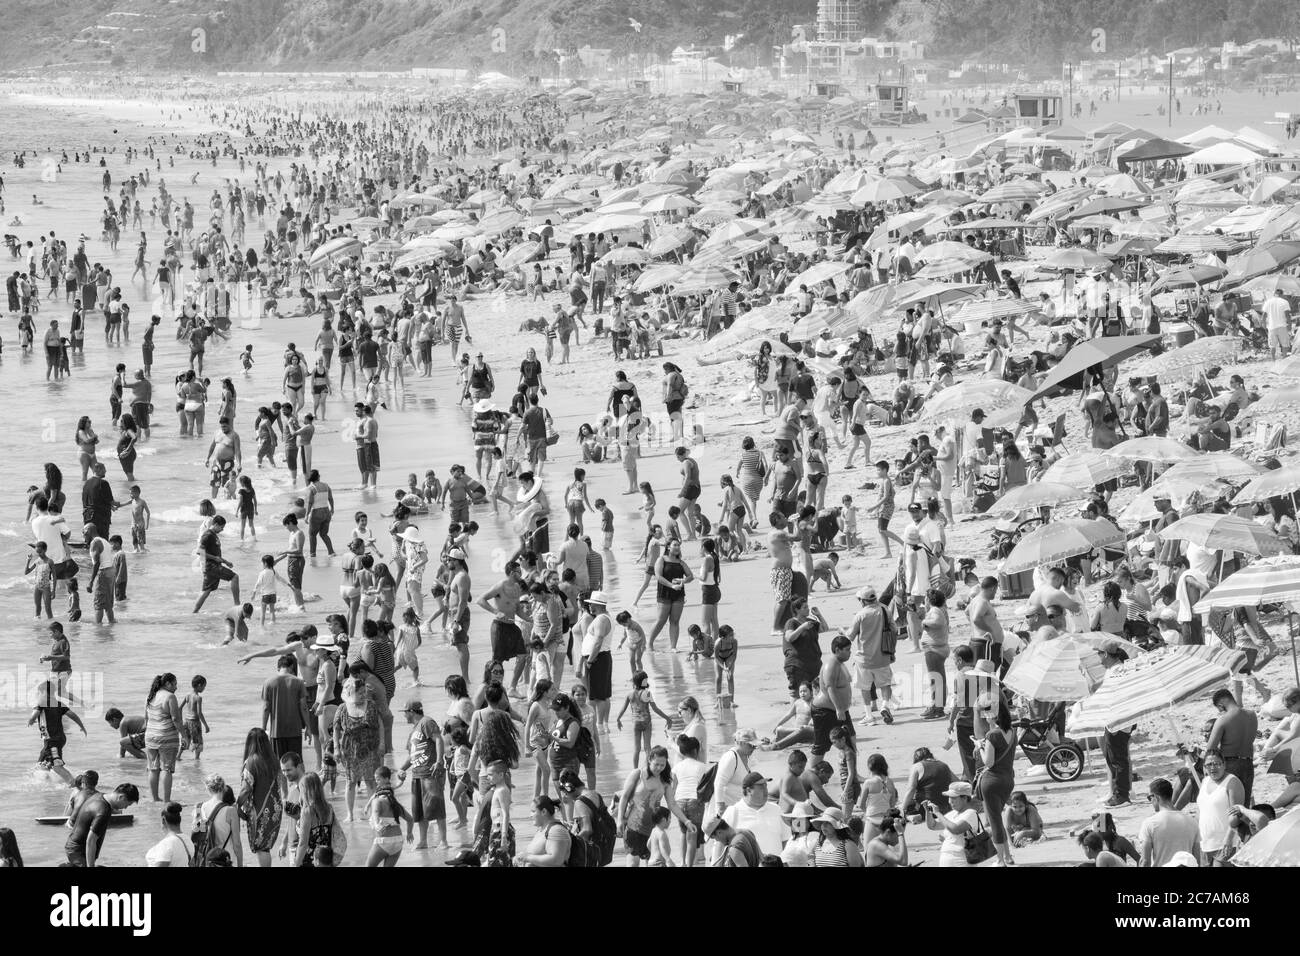 Crowds on beach, Labor Day 2017, Santa Monica, Los Angeles, California, USA Stock Photo